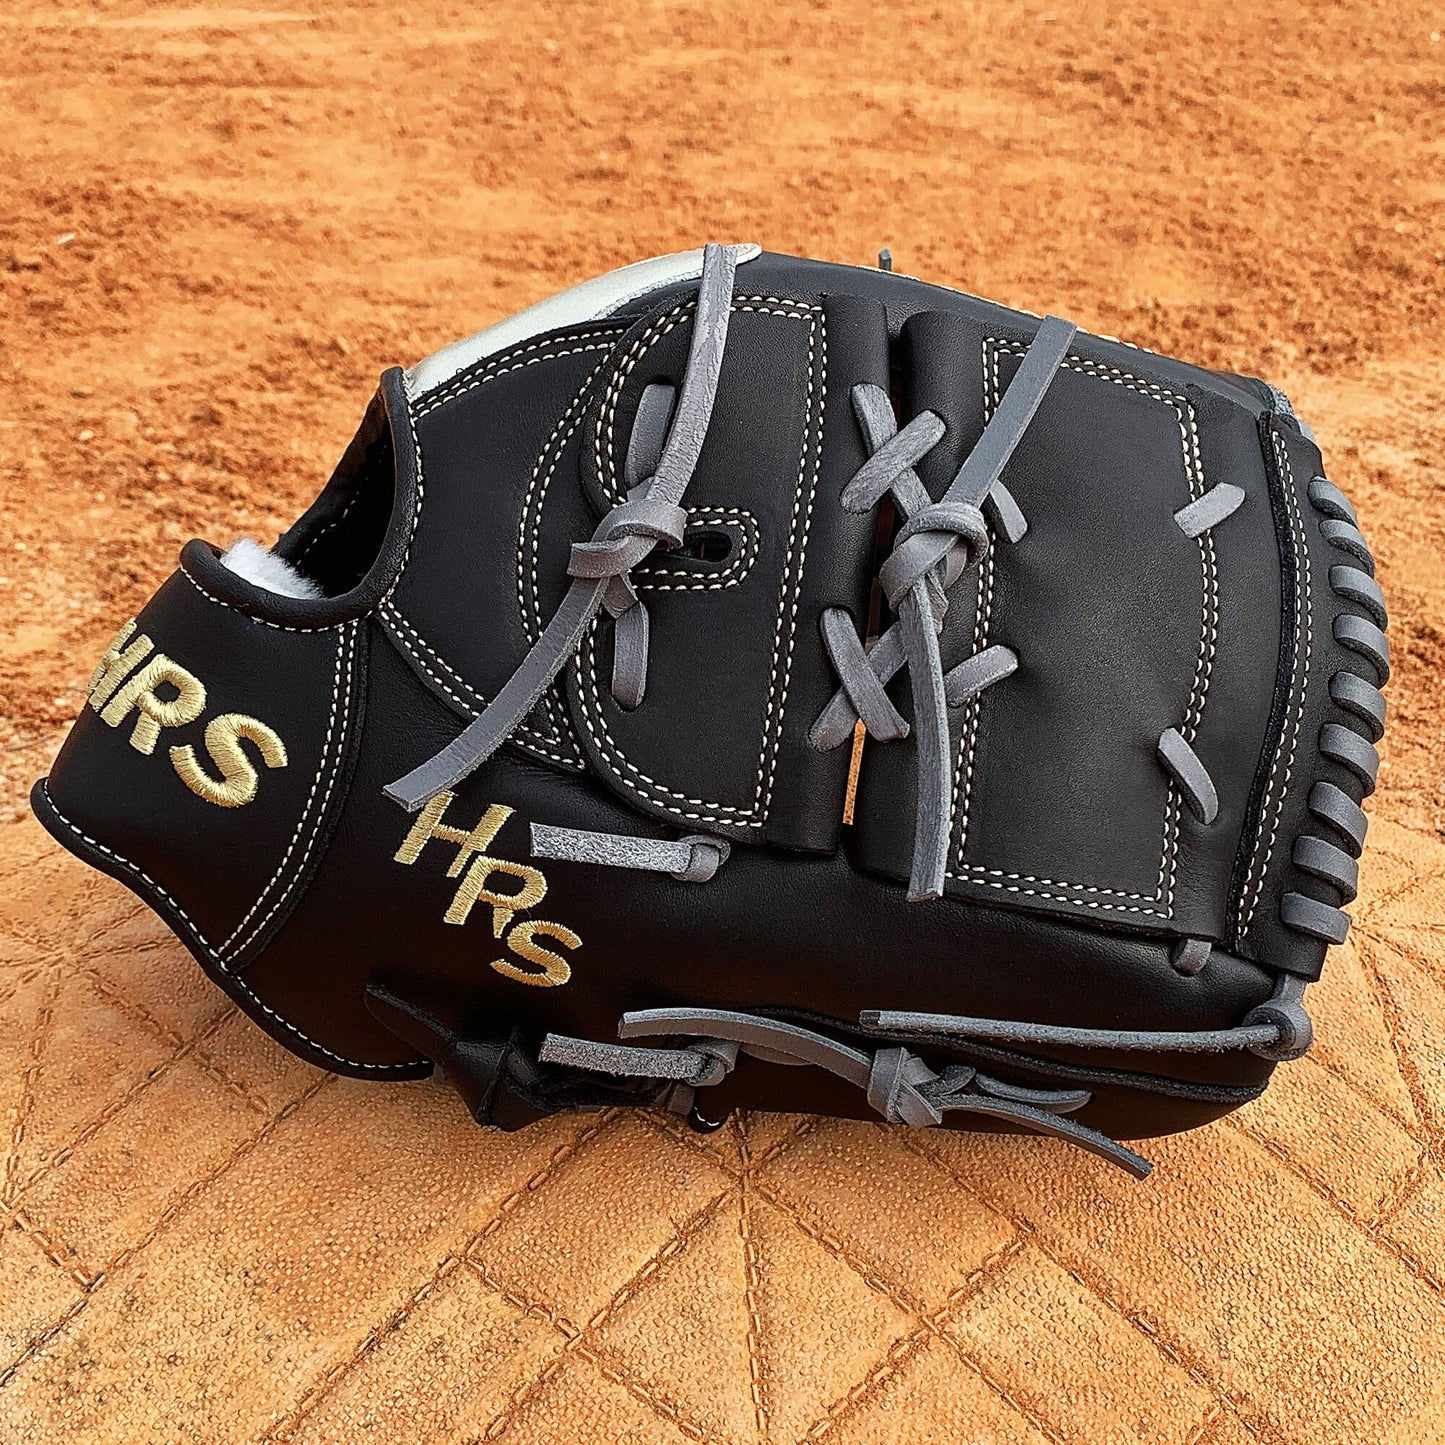 11.75" Limited Edition Team HRS Baseball Glove